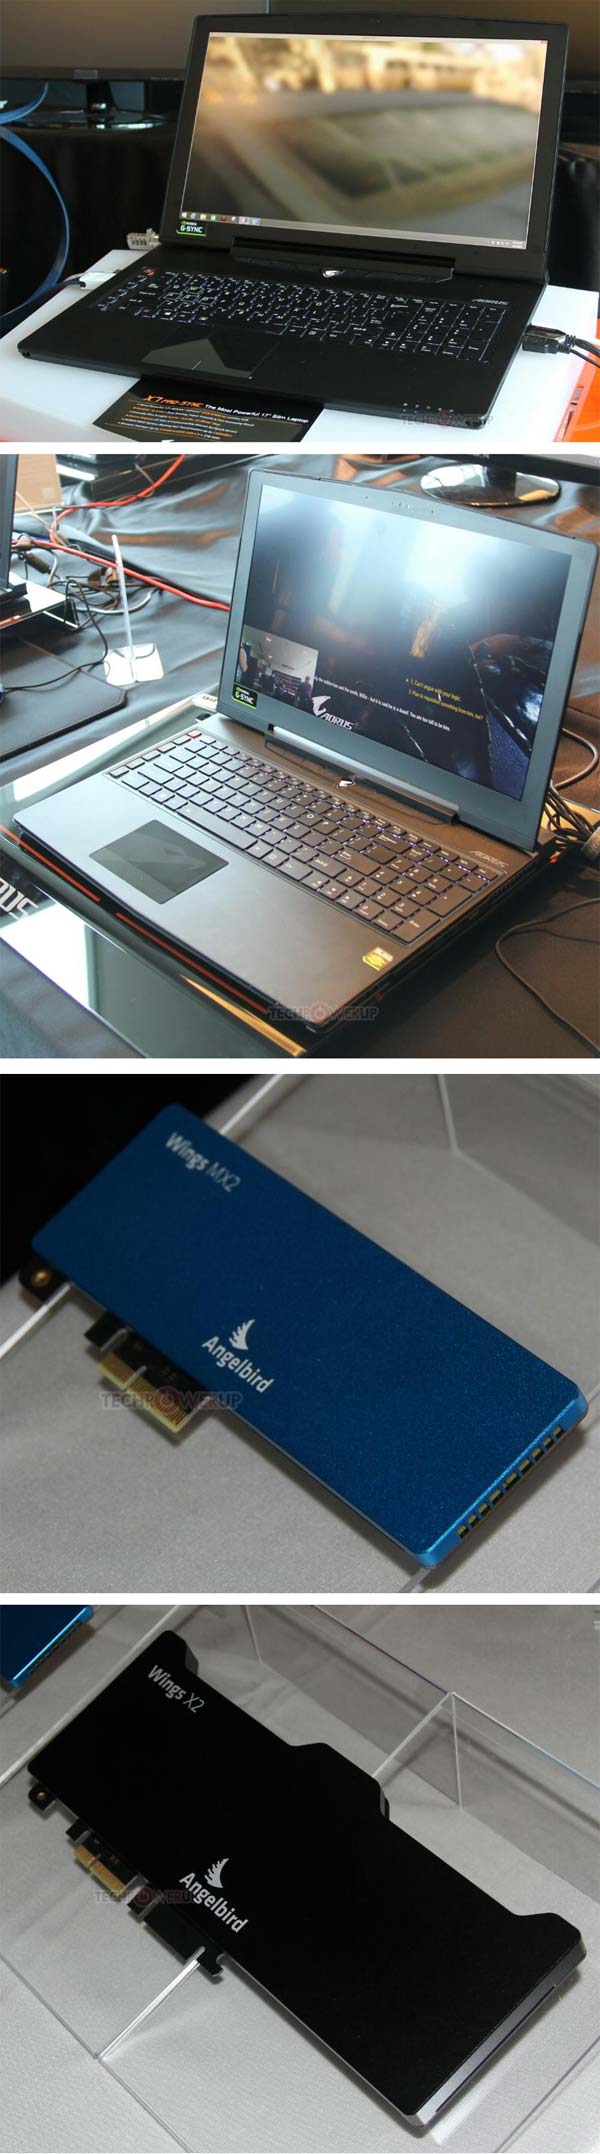 Ноутбуки Aorus X7 Pro-Sync и X5, а также SSD Angelbird Wings MX2 и Wings X2